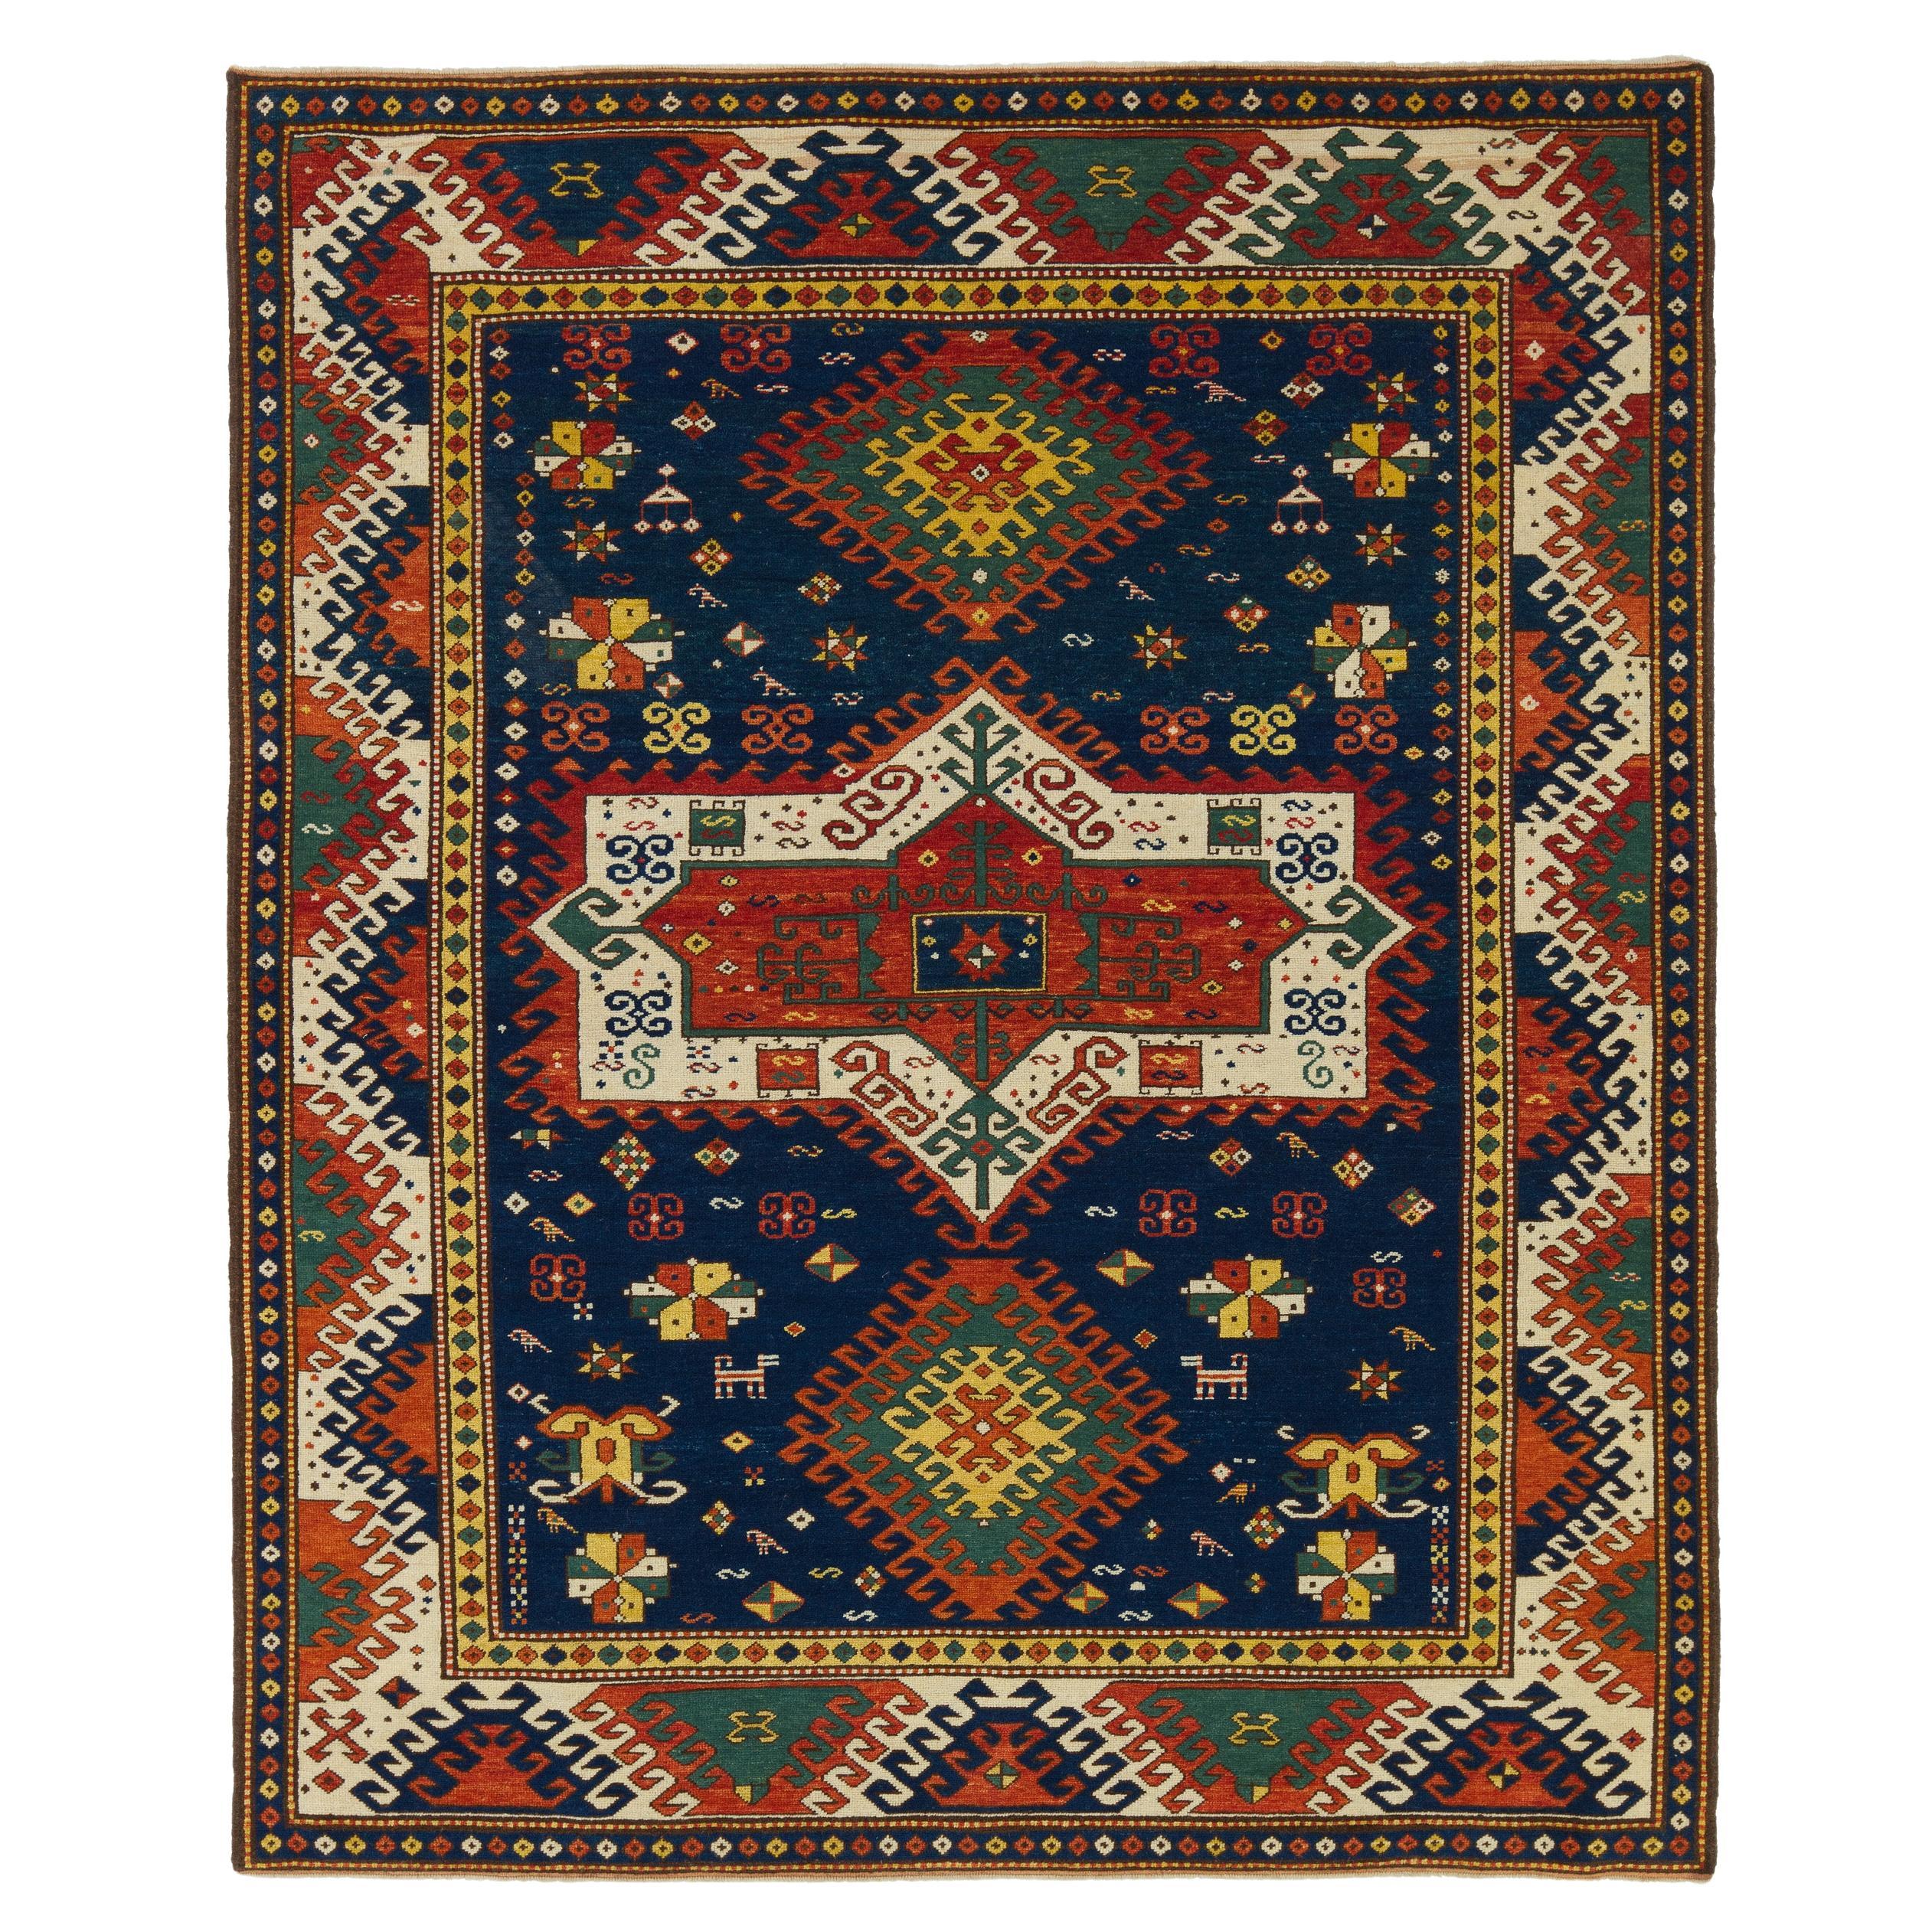 Ararat Rugs Fachralo Kazak Rug 19th Century Caucasus Revival Carpet Natural Dyed